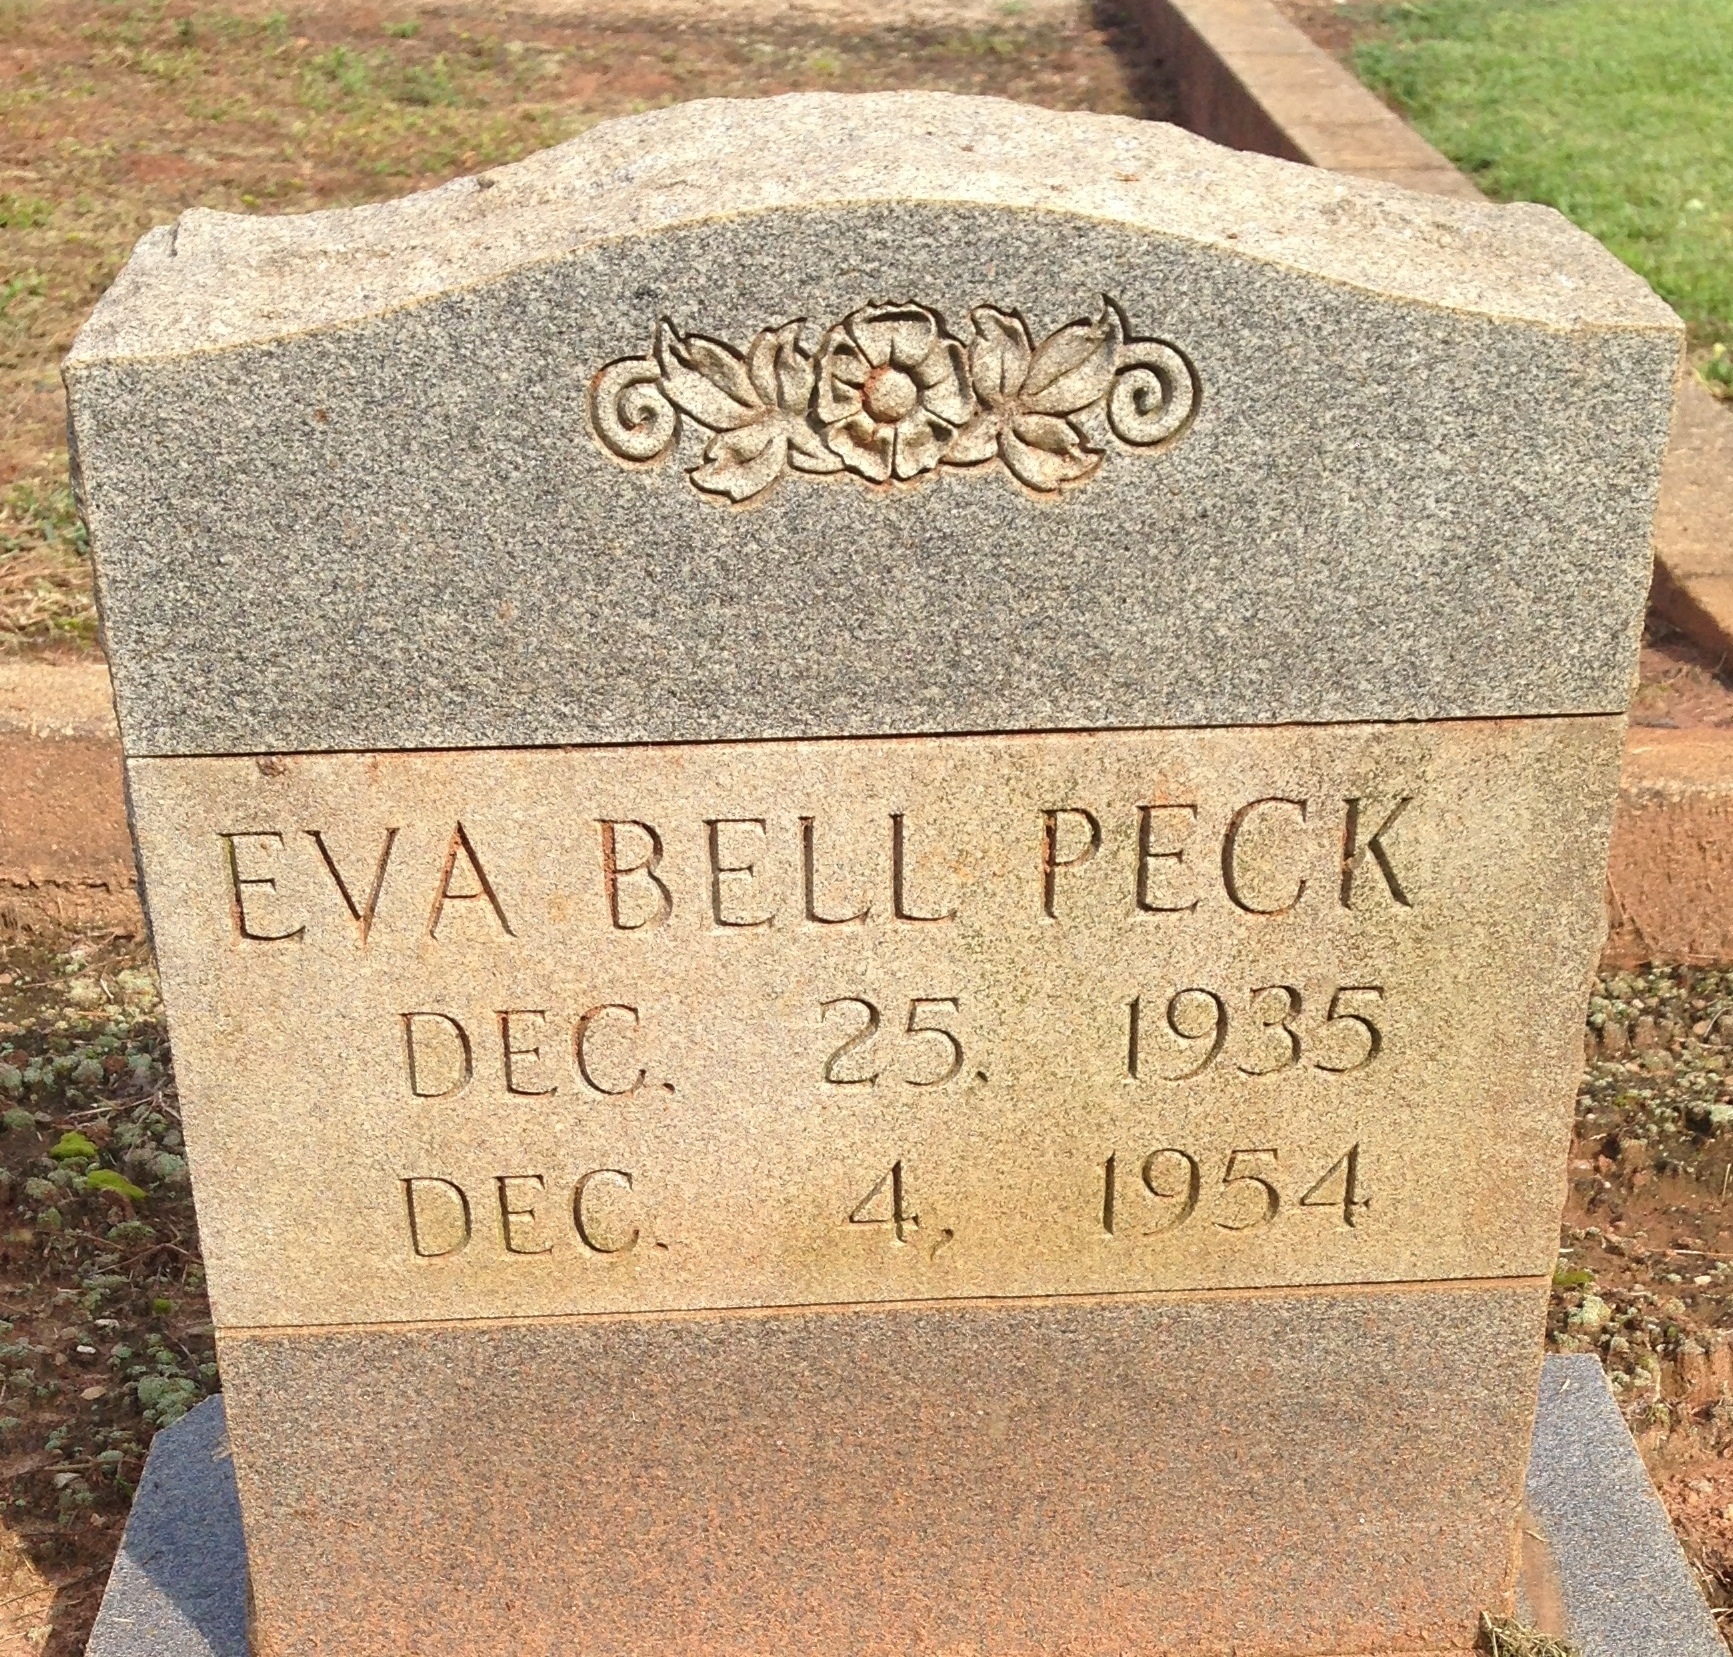 Eva Bell Peck gravesite